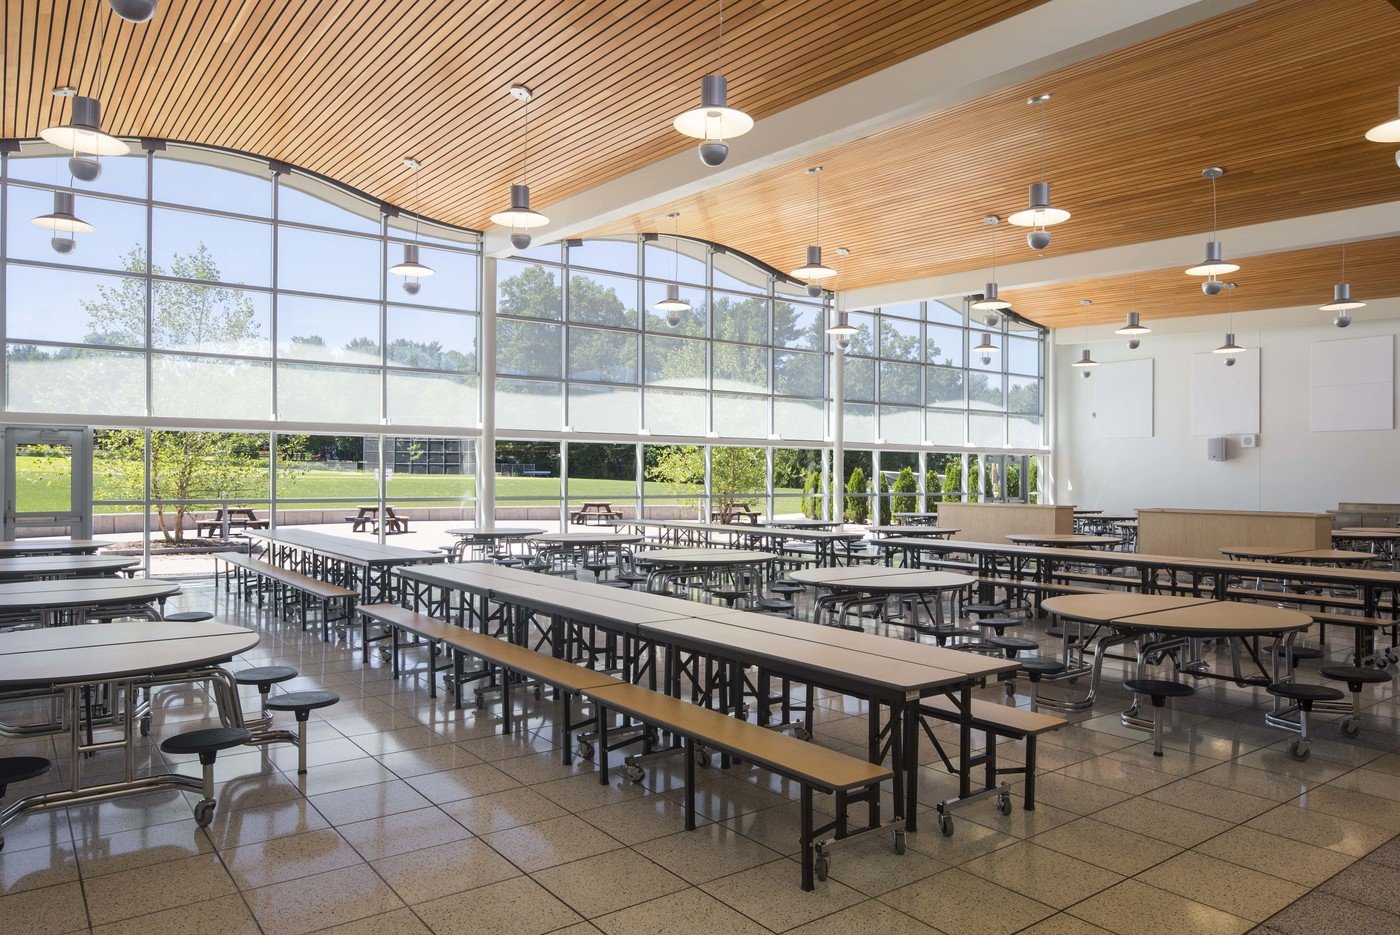 5 tskp bristol greene hills elementary school interior cafeteria 1400 0x0x6135x4096 q85